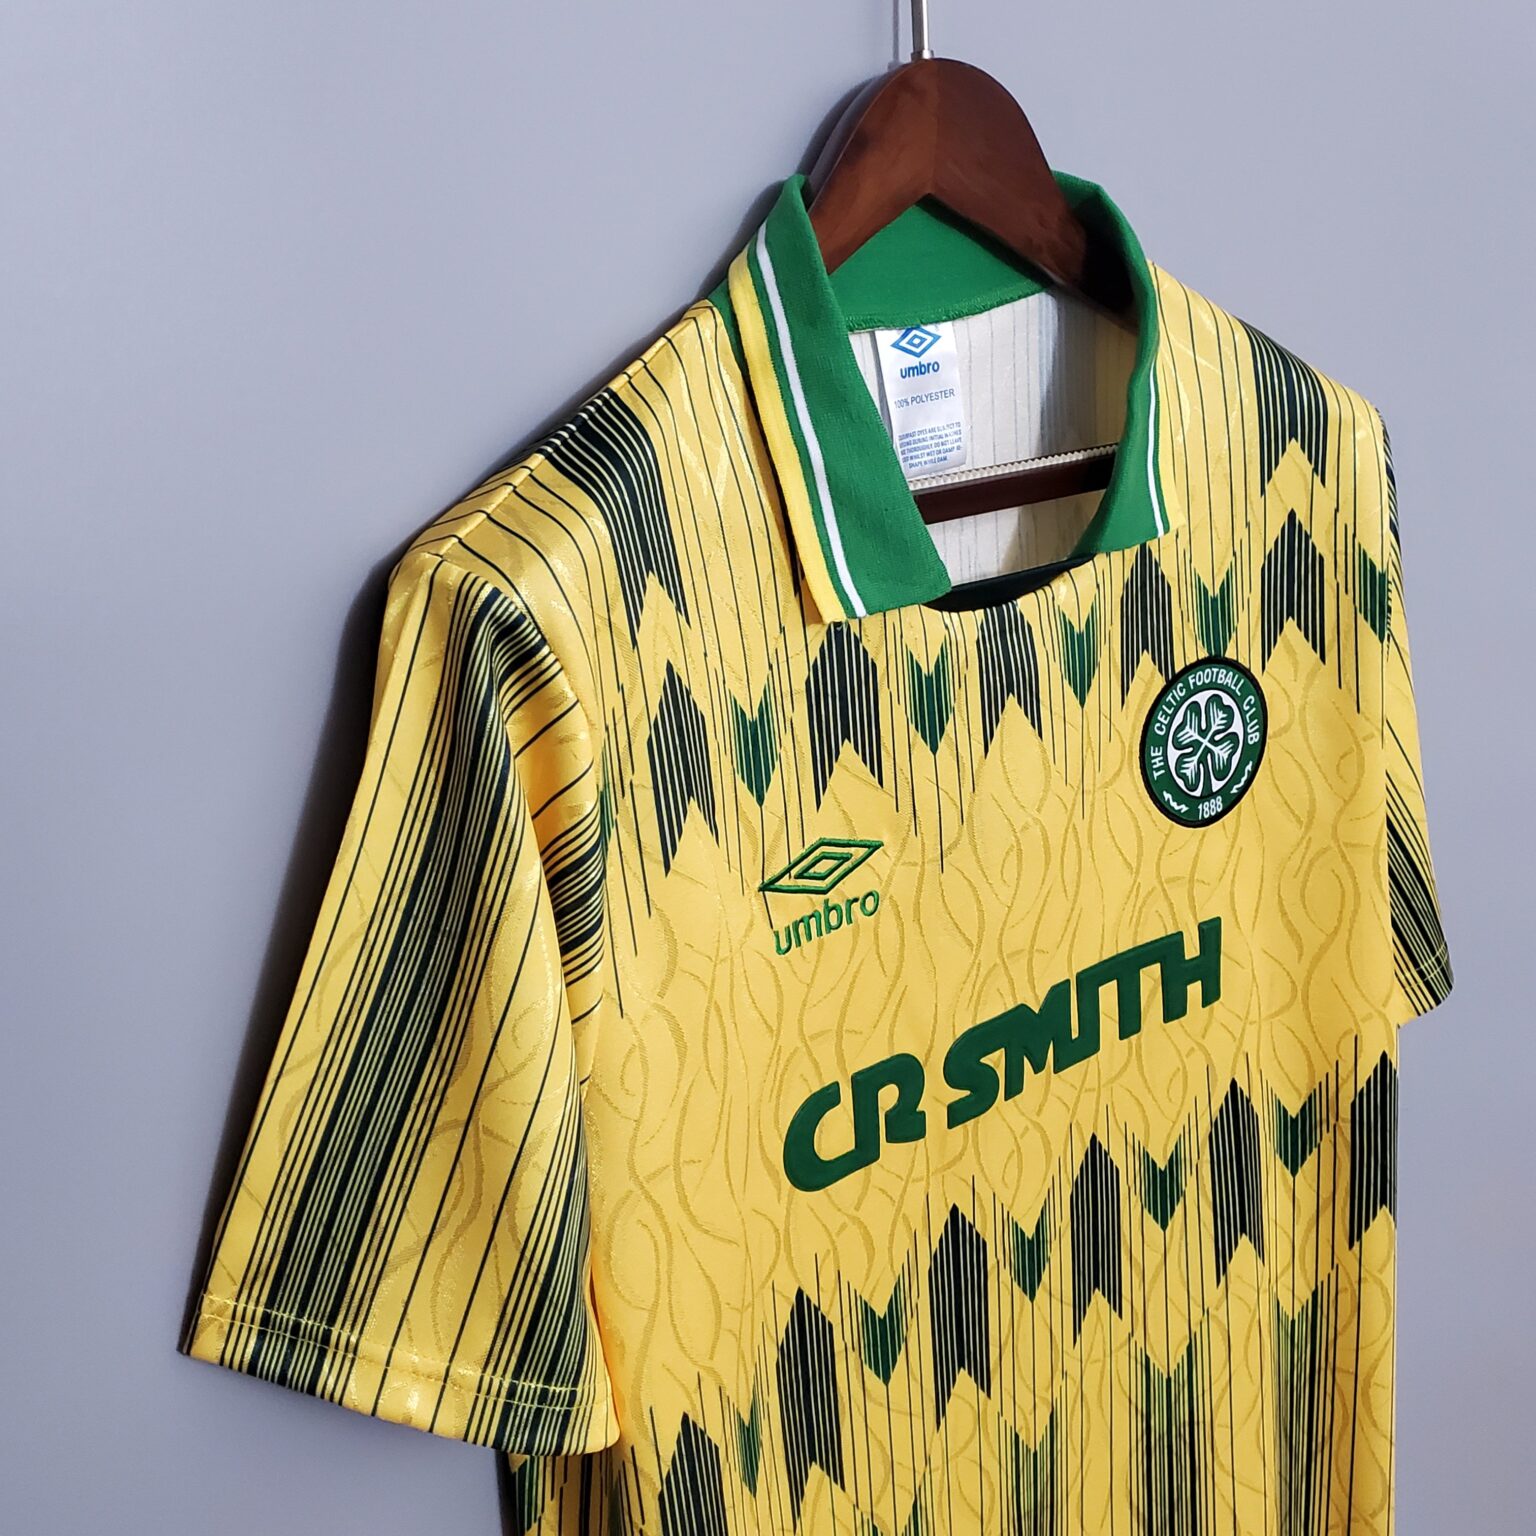 Celtic Away football shirt 1978 - 1980. Sponsored by no sponsor